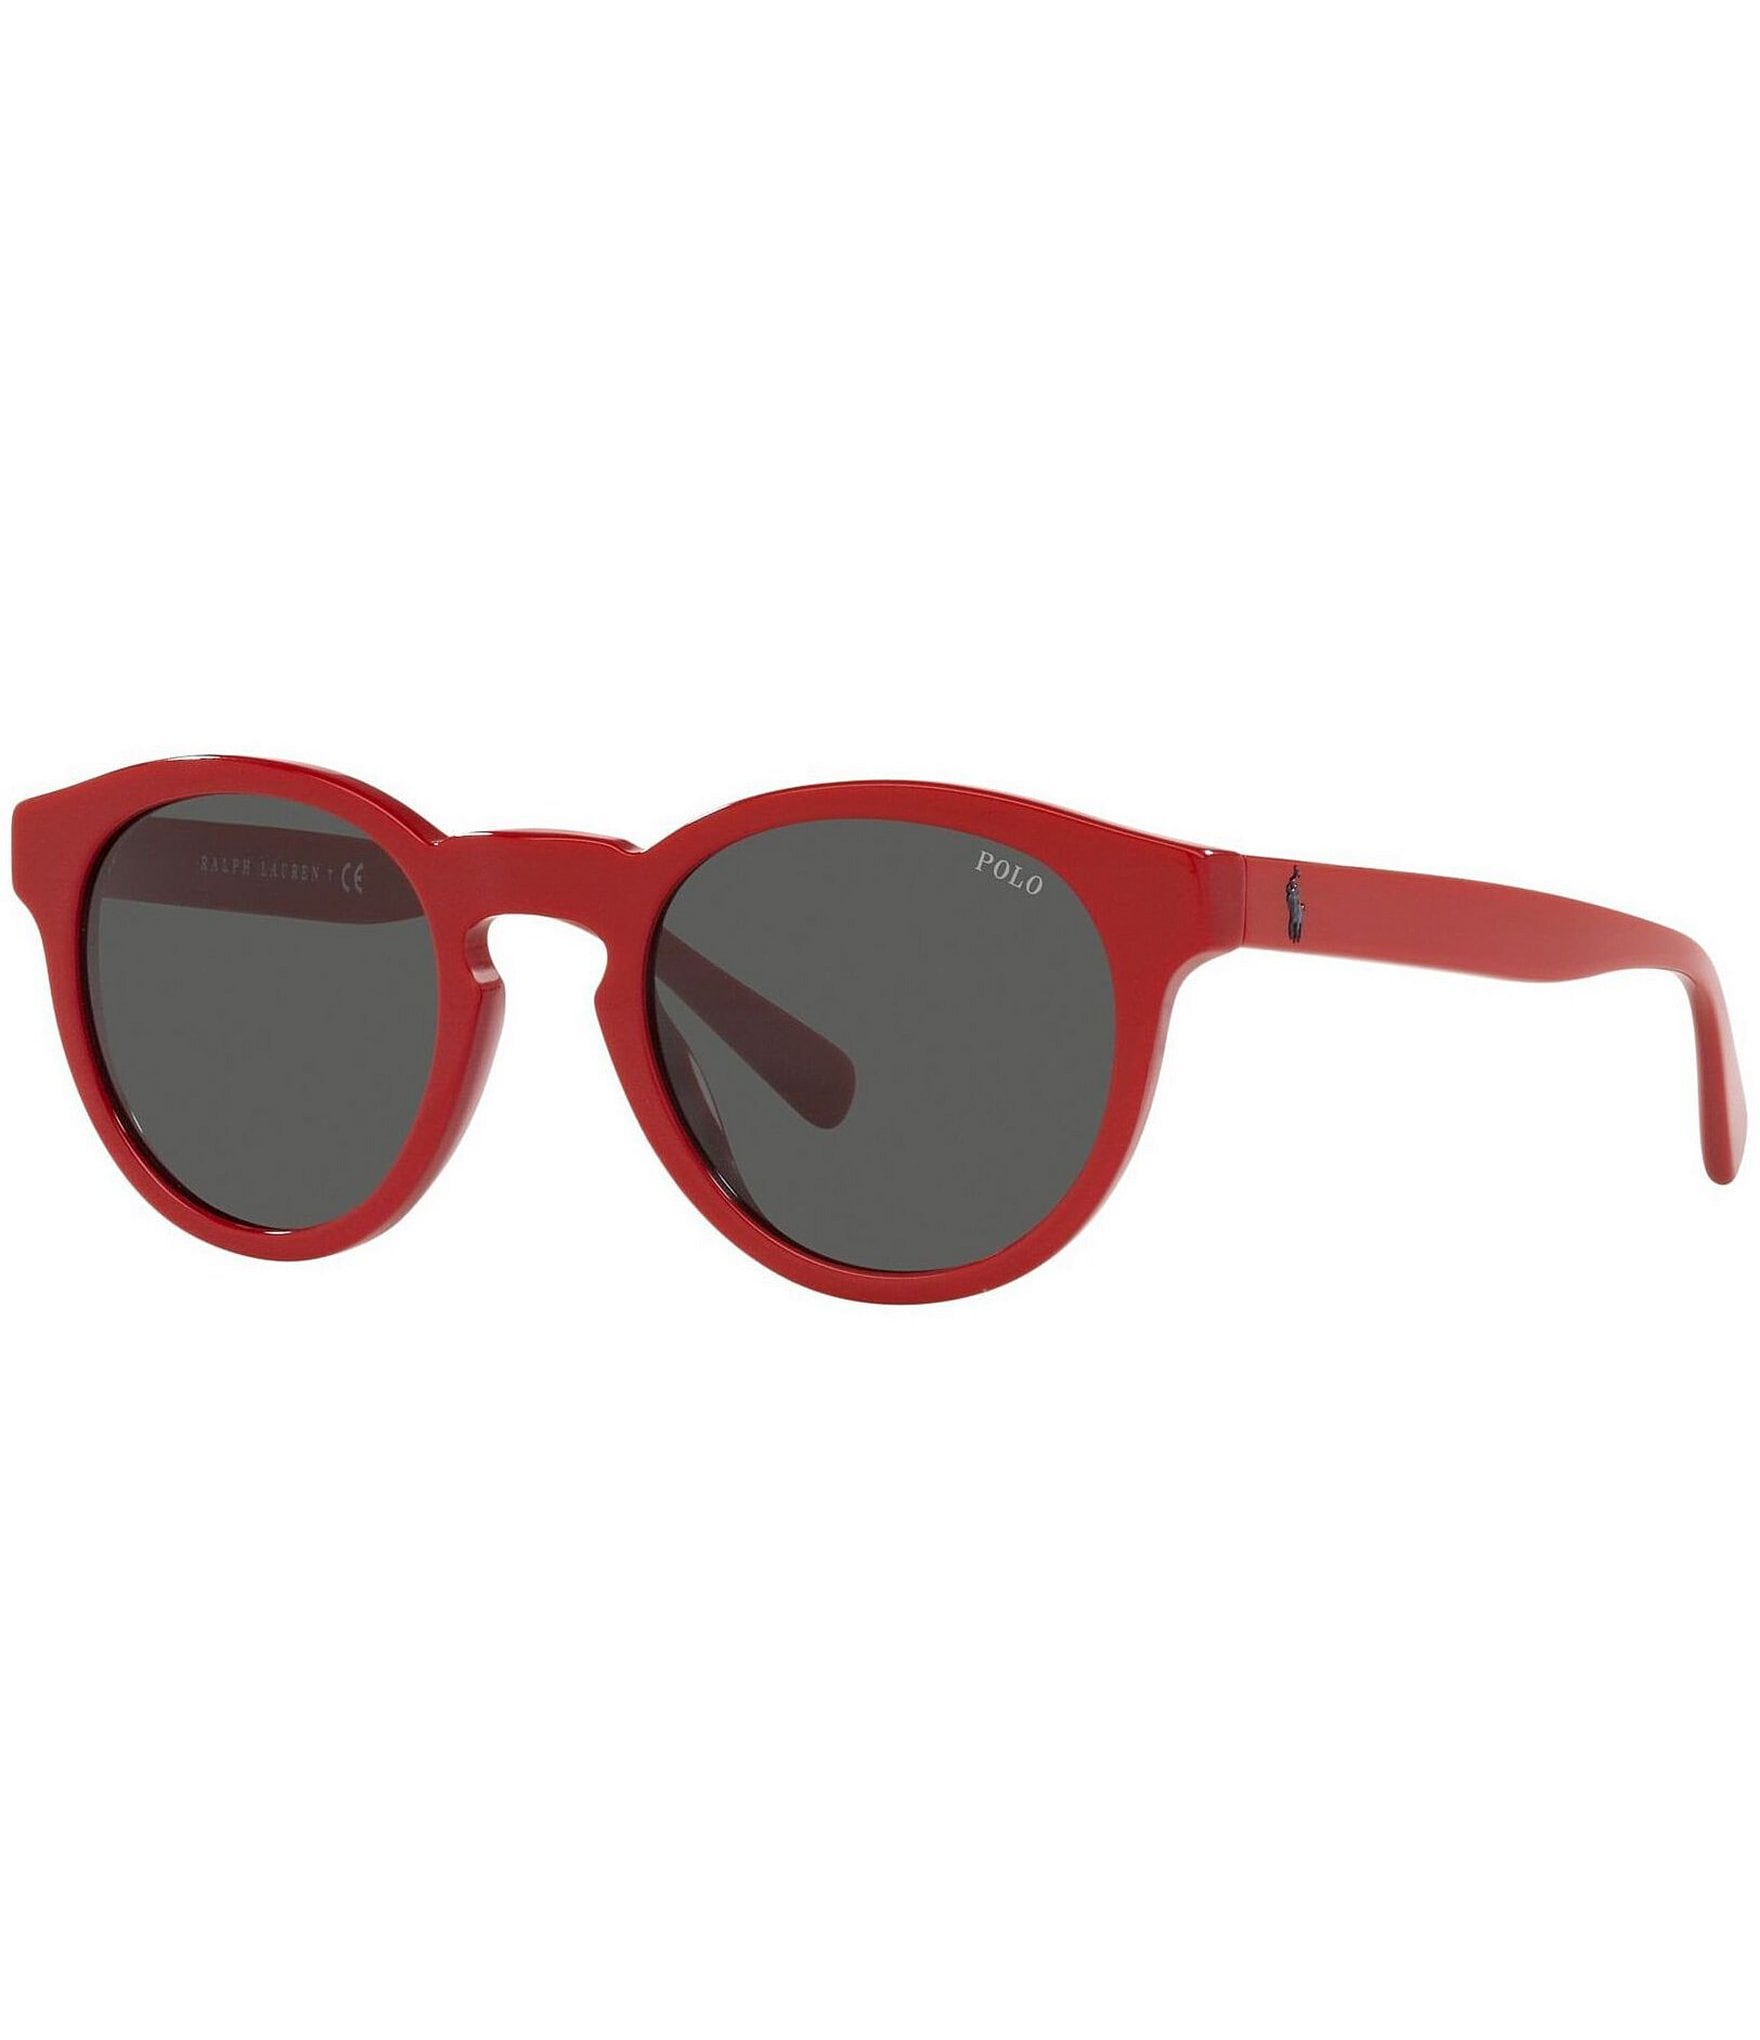 Polo Ralph Lauren Women's Ph4184 49mm Solid Color Oval Sunglasses ...